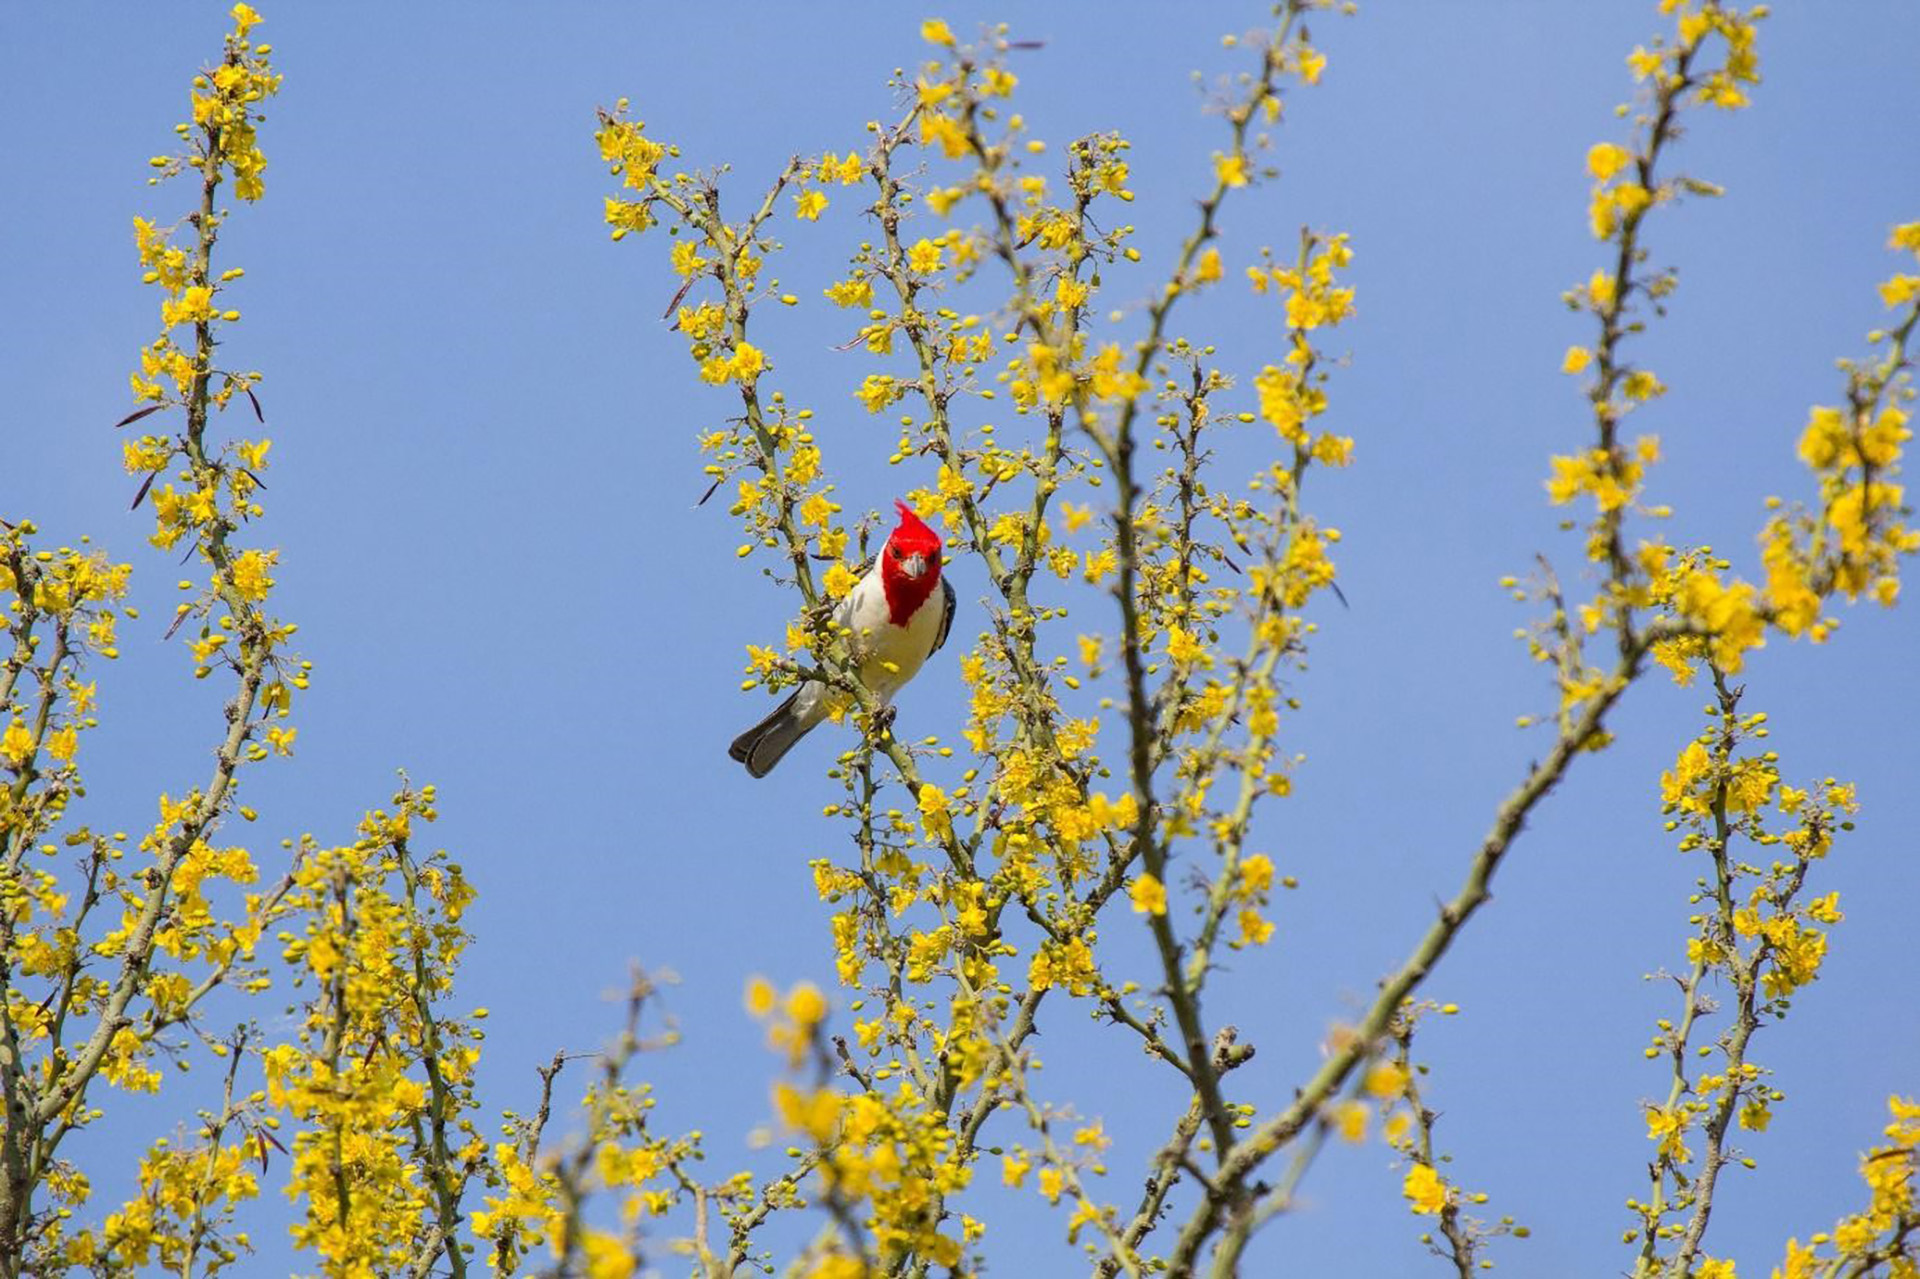 Red-Crested Cardinal (Paroaira coronata) is a characteristic bird of the Gran Chaco region. (Source: Andrea Ferreira)